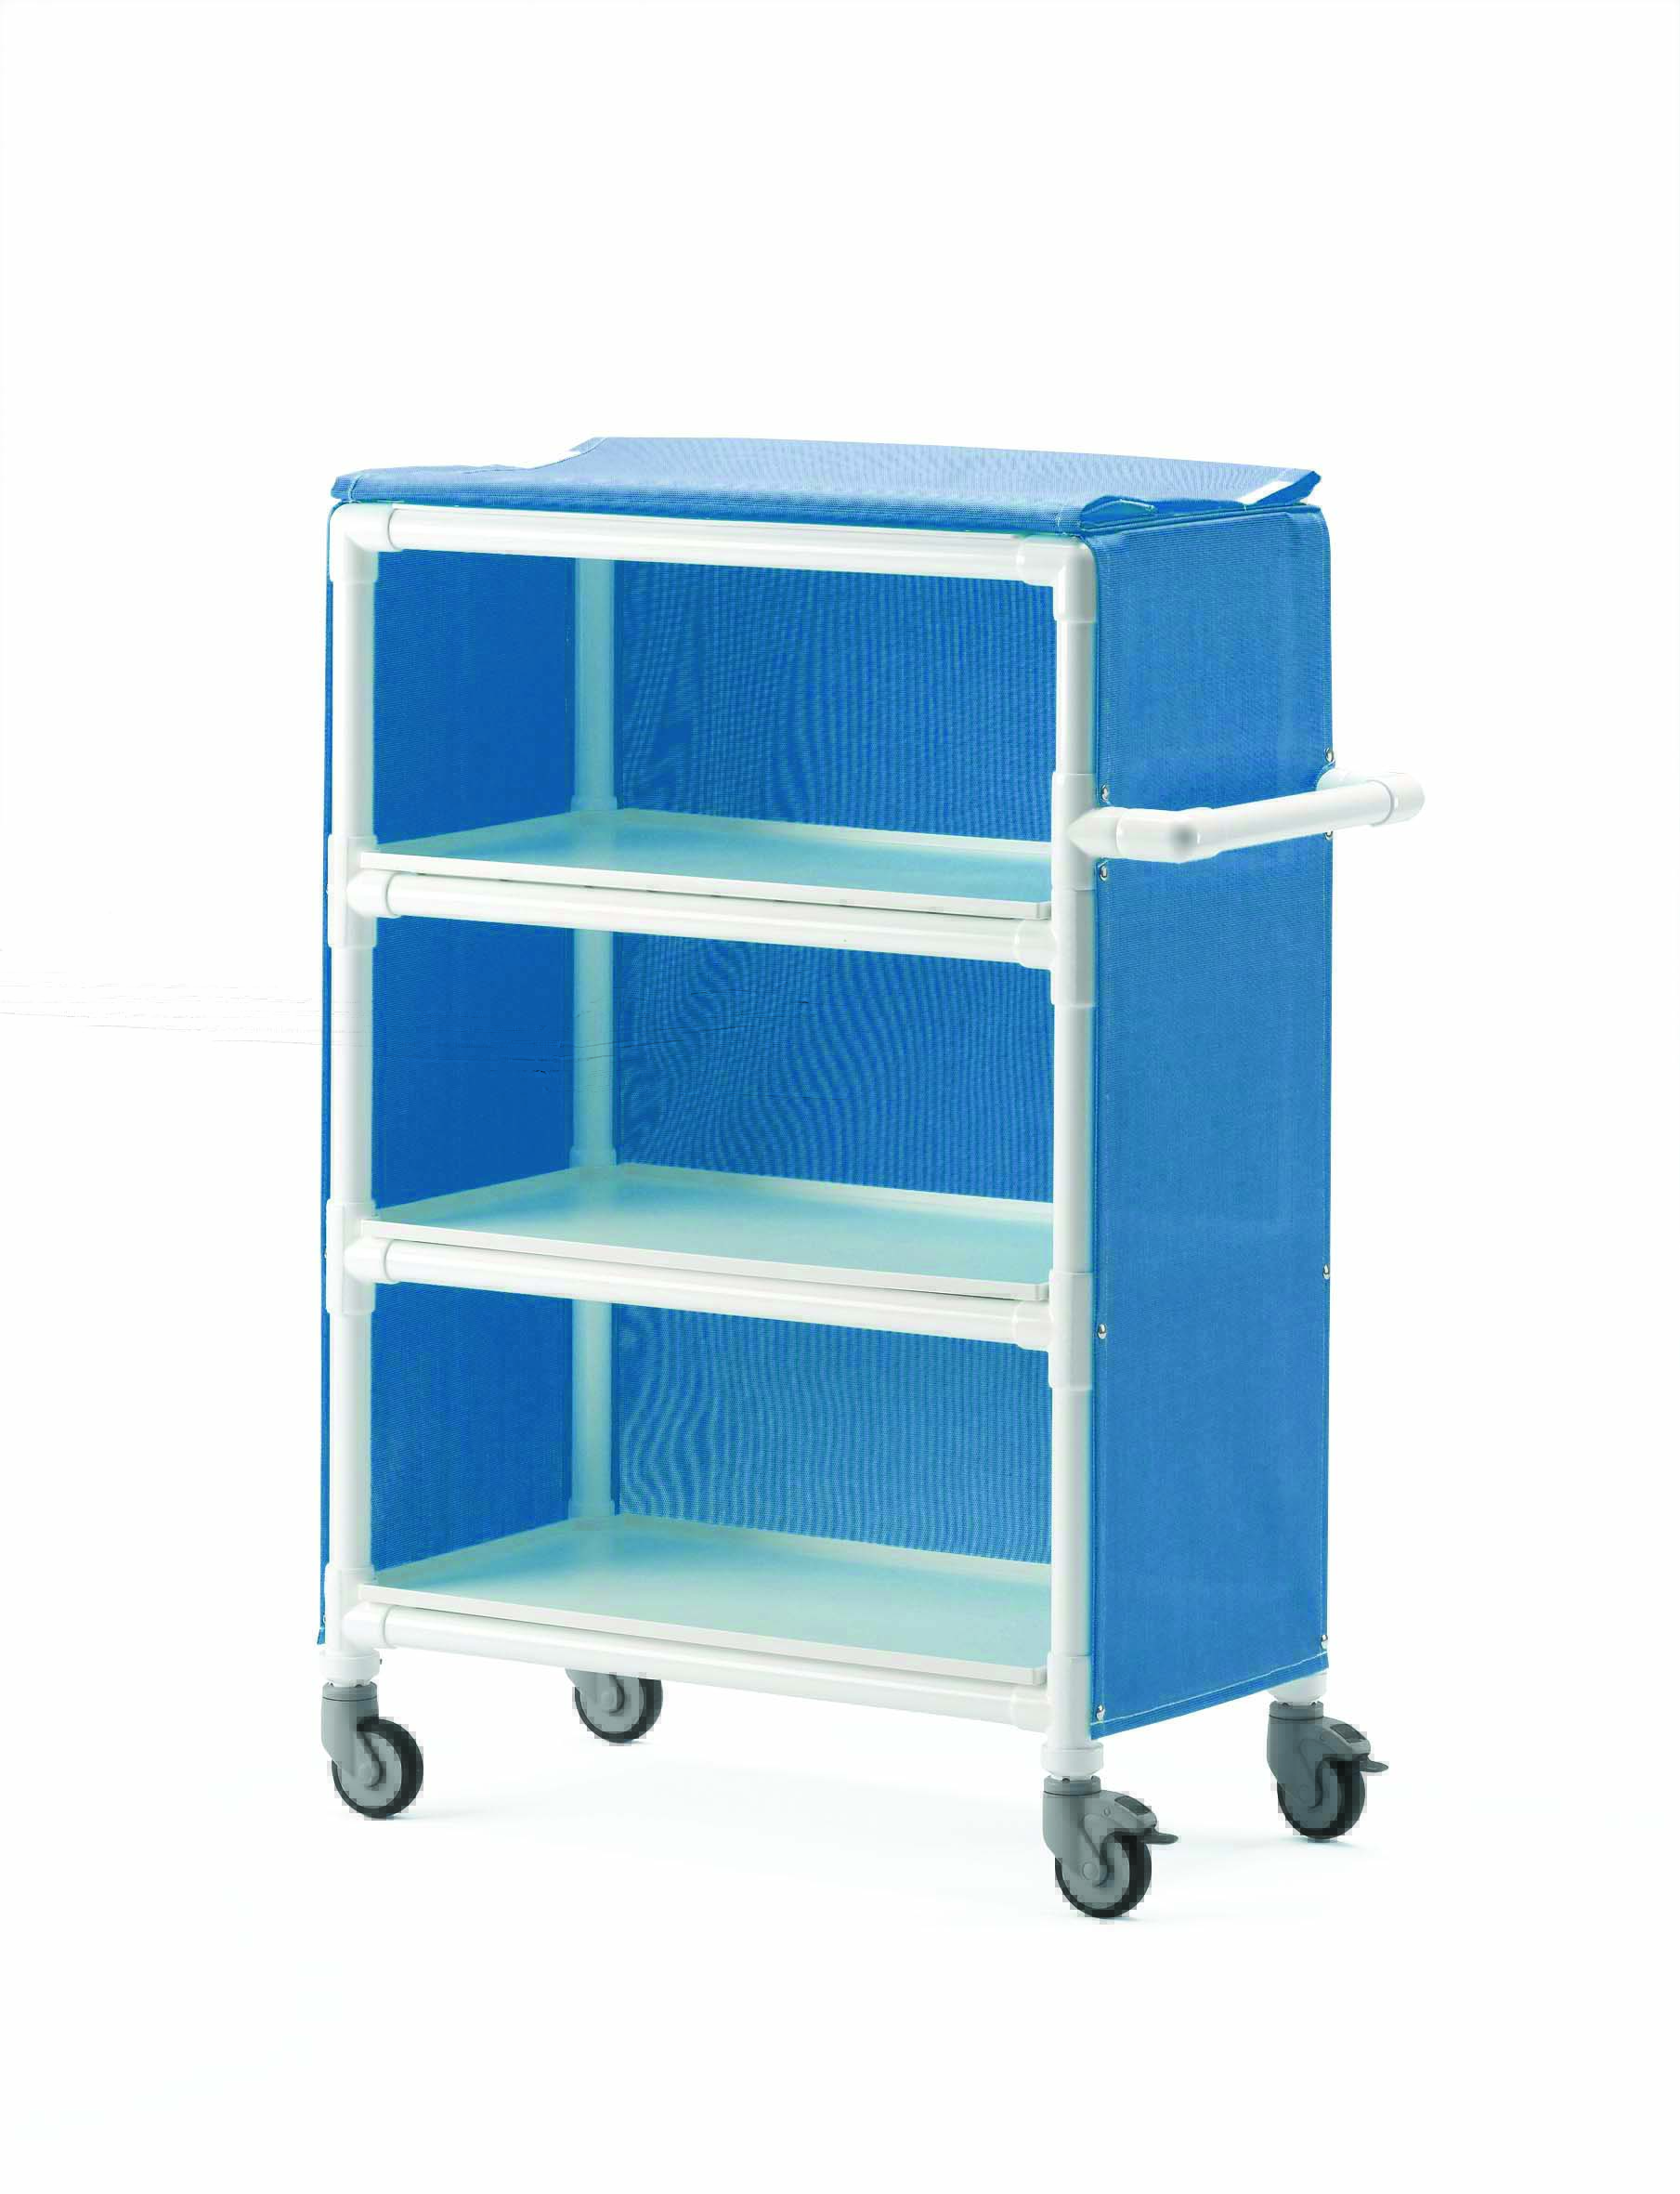 Picture of MLC Clean Linen Distribution Cart - 3 Shelves - Blue Cover